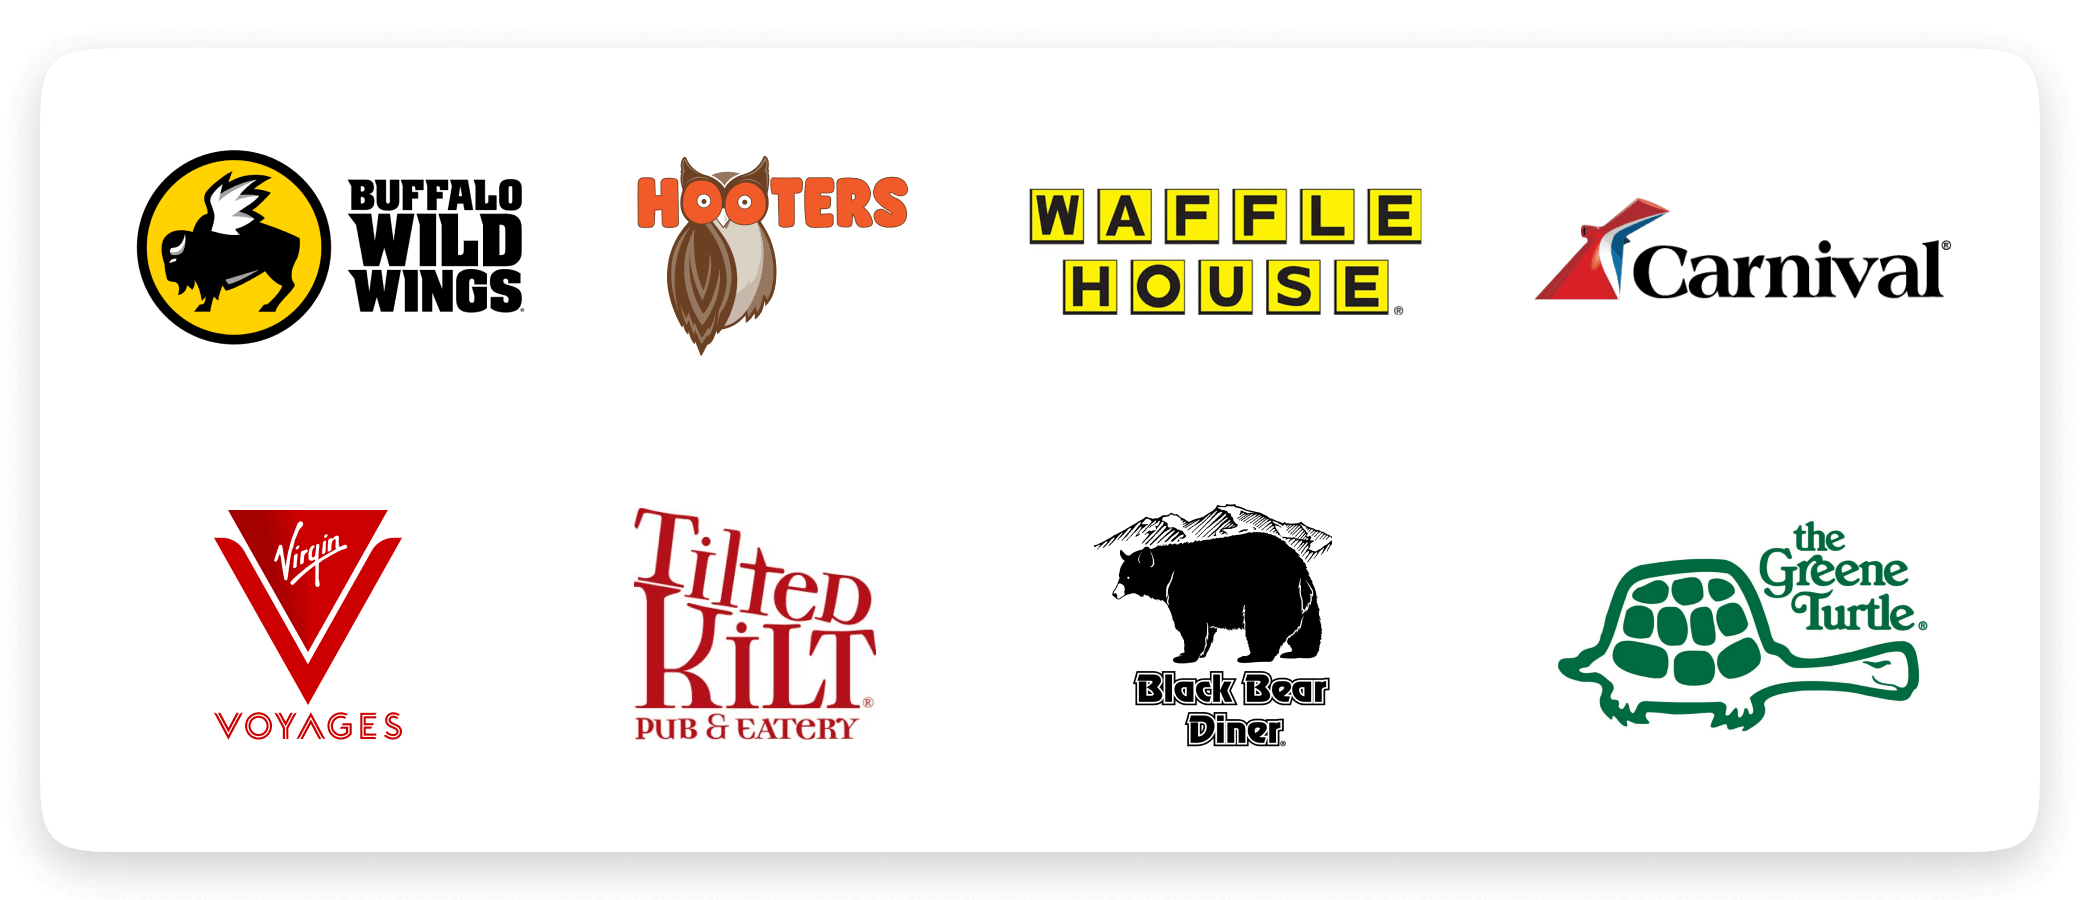 [logos] Buffalo Wild Wings, Hooters, Waffle House, Carnival Cruises, Virgin Voyages, Tilted Kilt, Black Bear Diner, The Greene Turtle